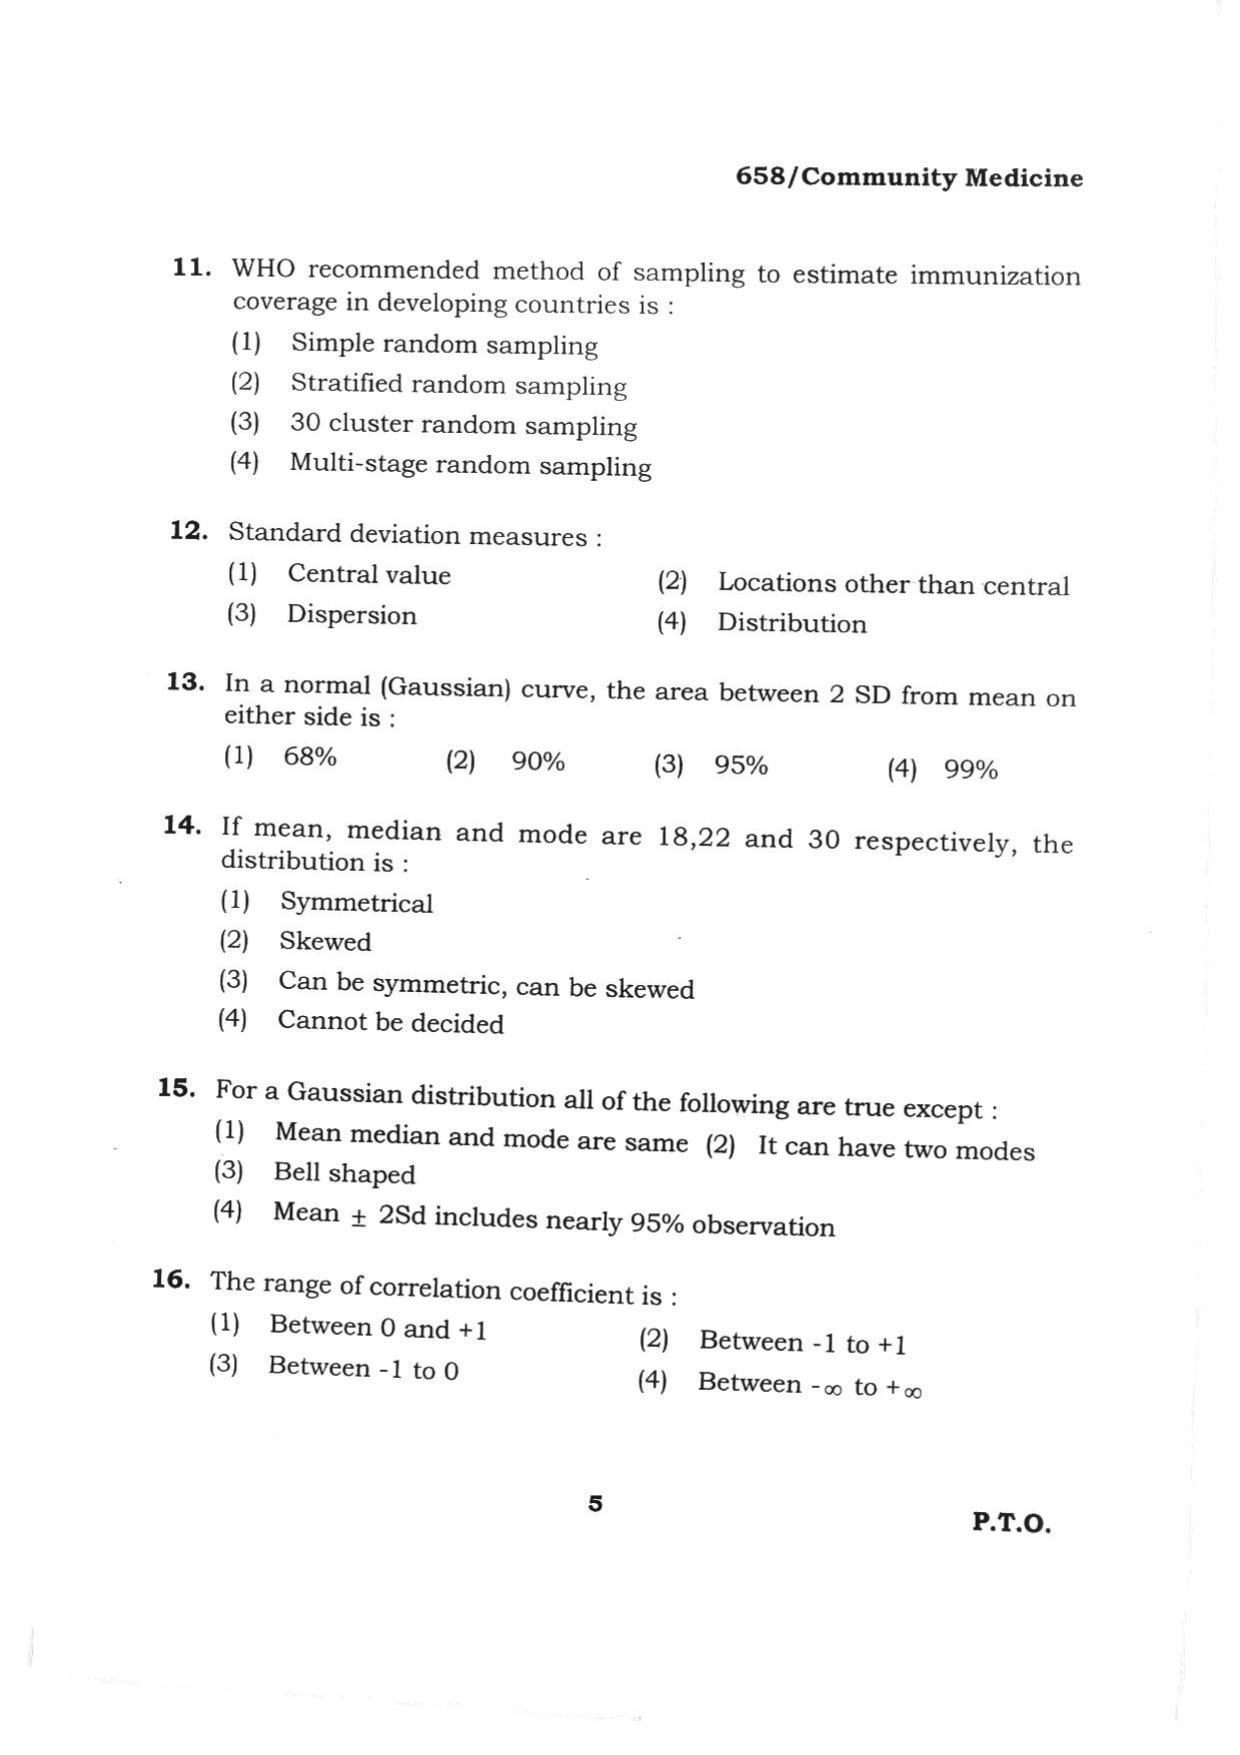 BHU RET COMMUNITY MEDICINE 2015 Question Paper - Page 5